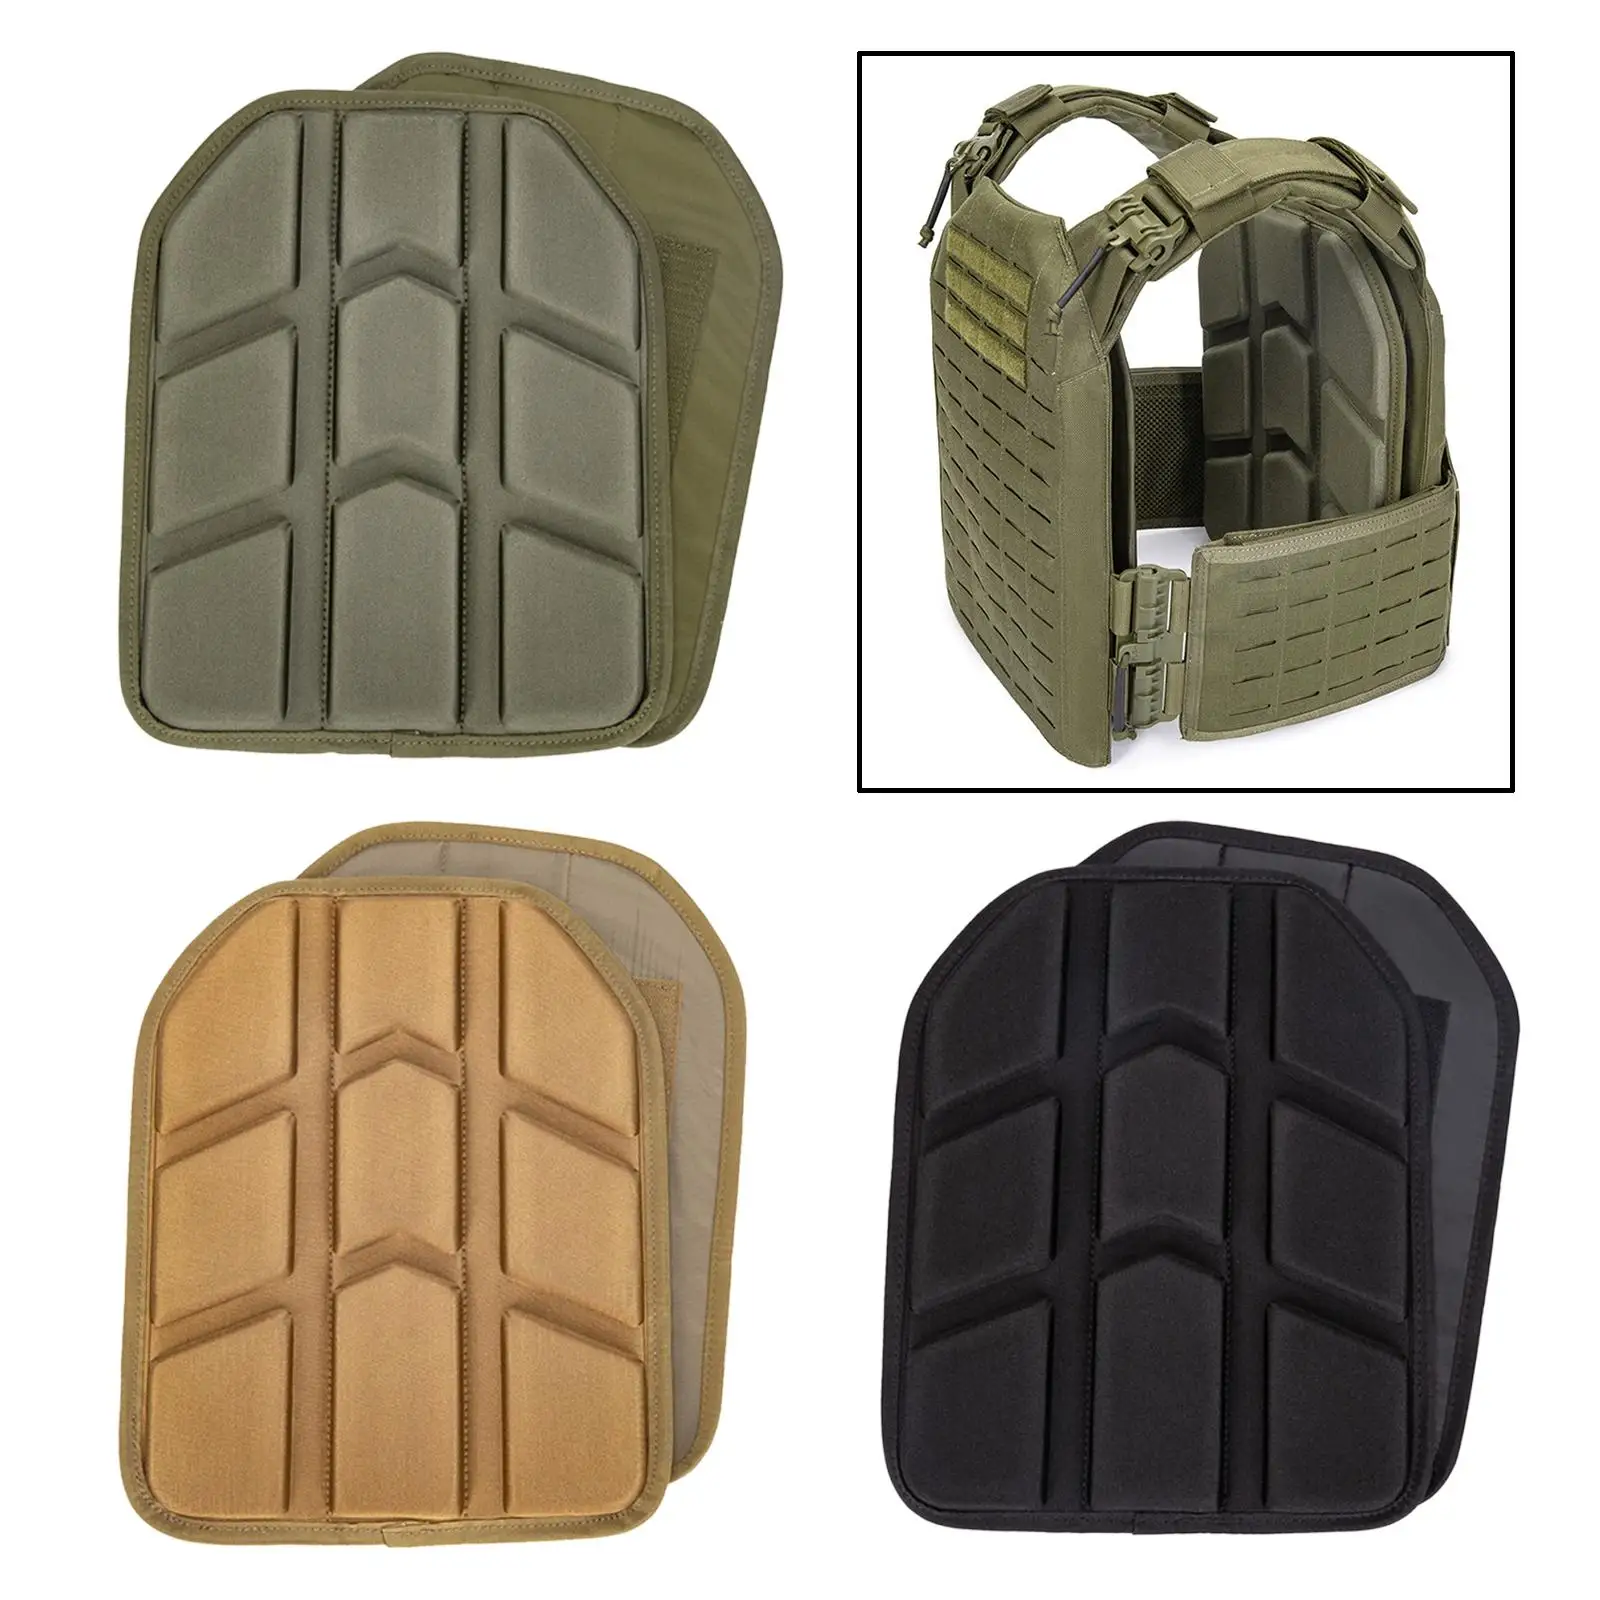 2x Shock Plates Removable Body Carrier Vest Adjustable for